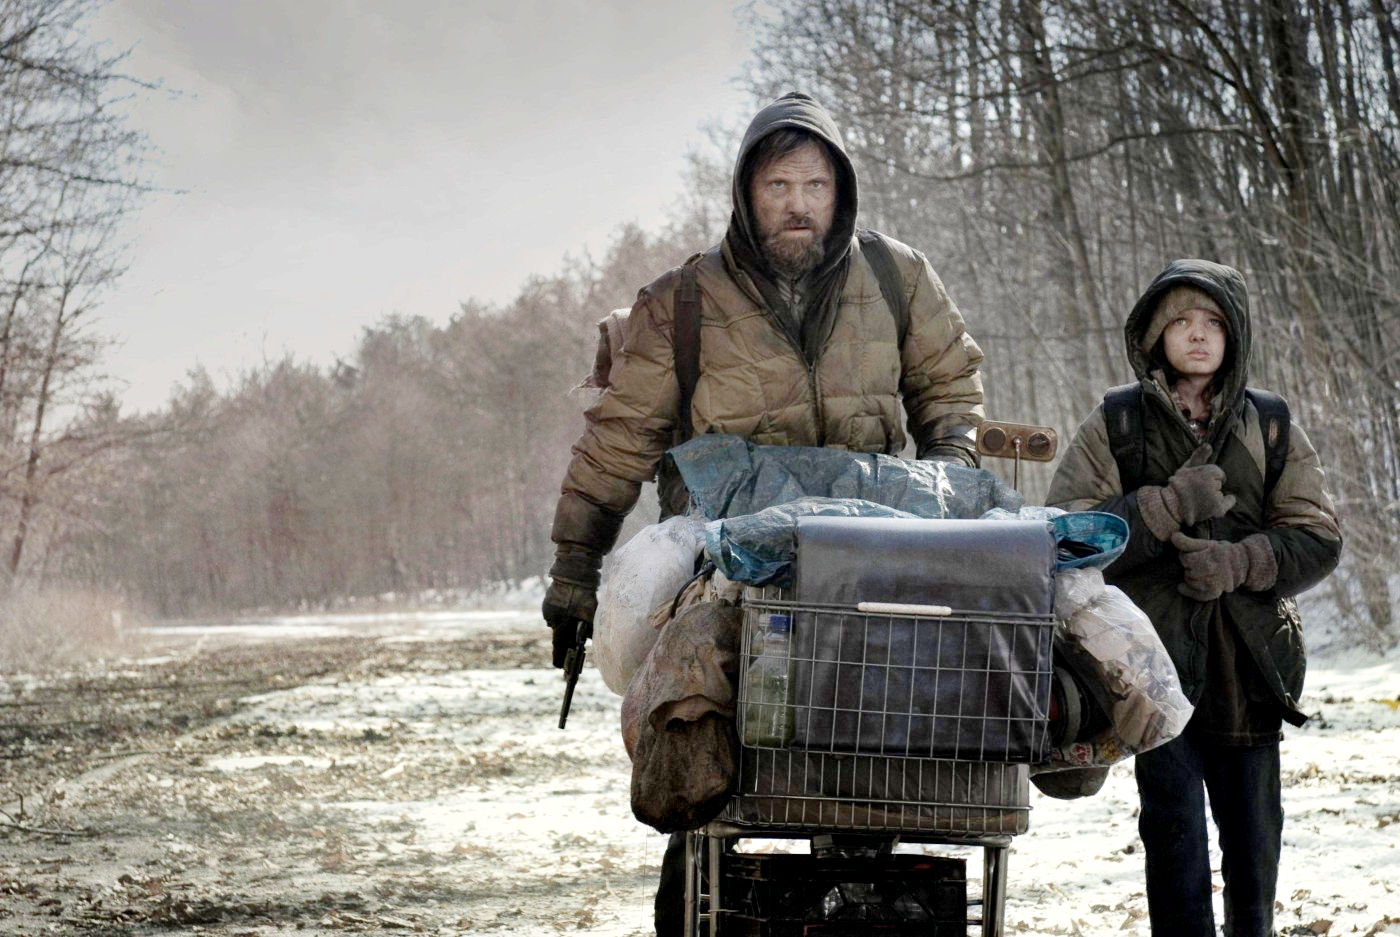 The Man (Viggo Mortensen) and Boy (Kodi Smit-McPhee) make their way across the post-apocalyptic landscape in The Road (2009)